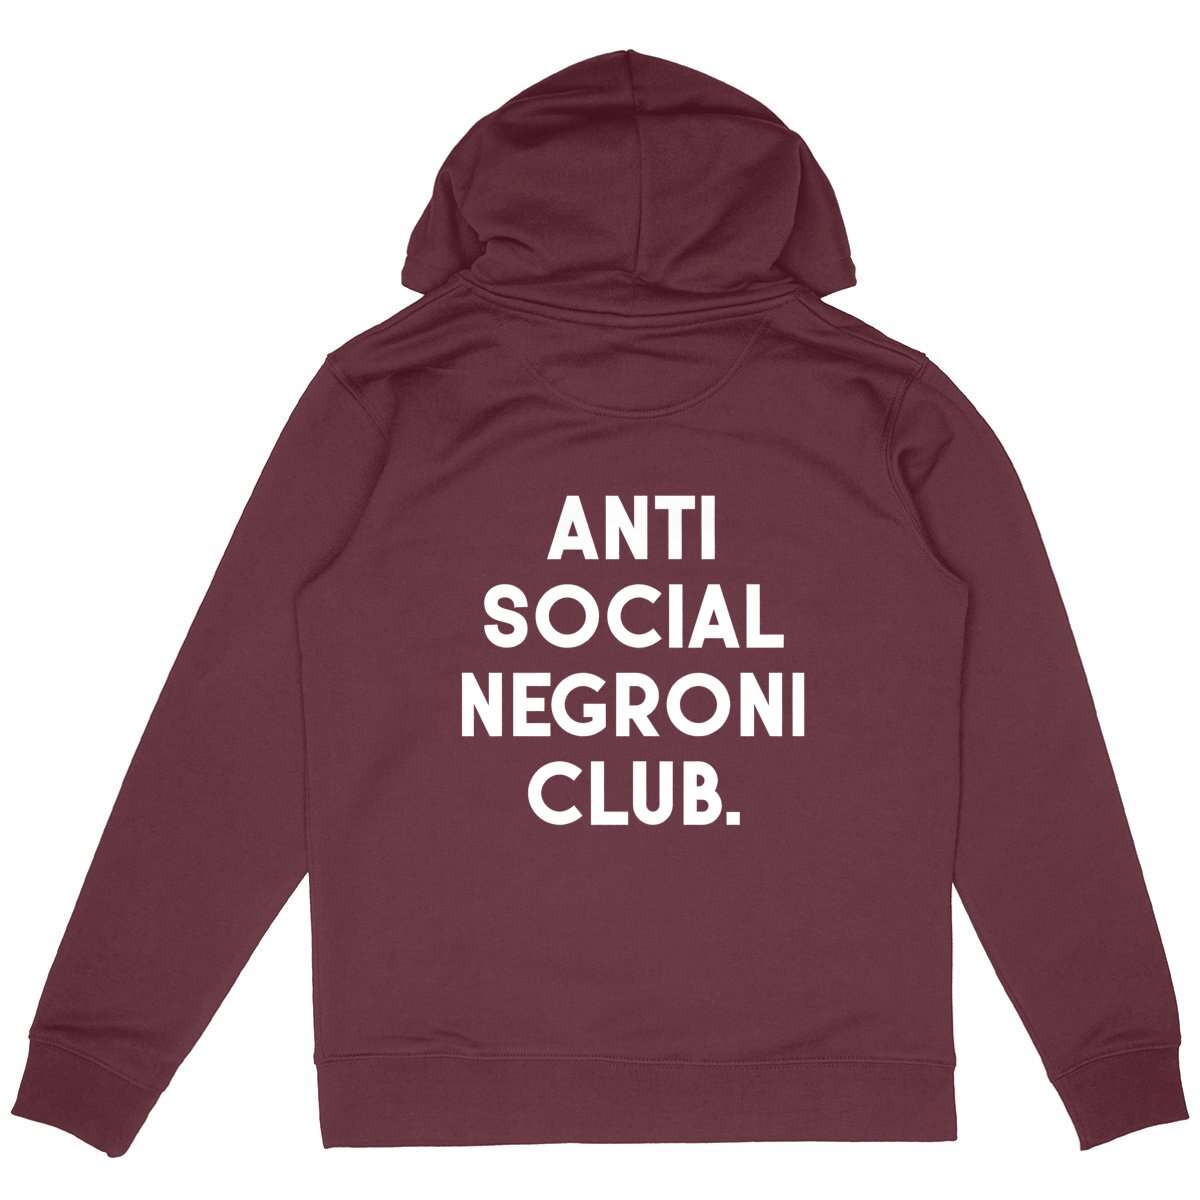 Anti Social Negroni Club - Organic Hoodie - The Refined Spirit